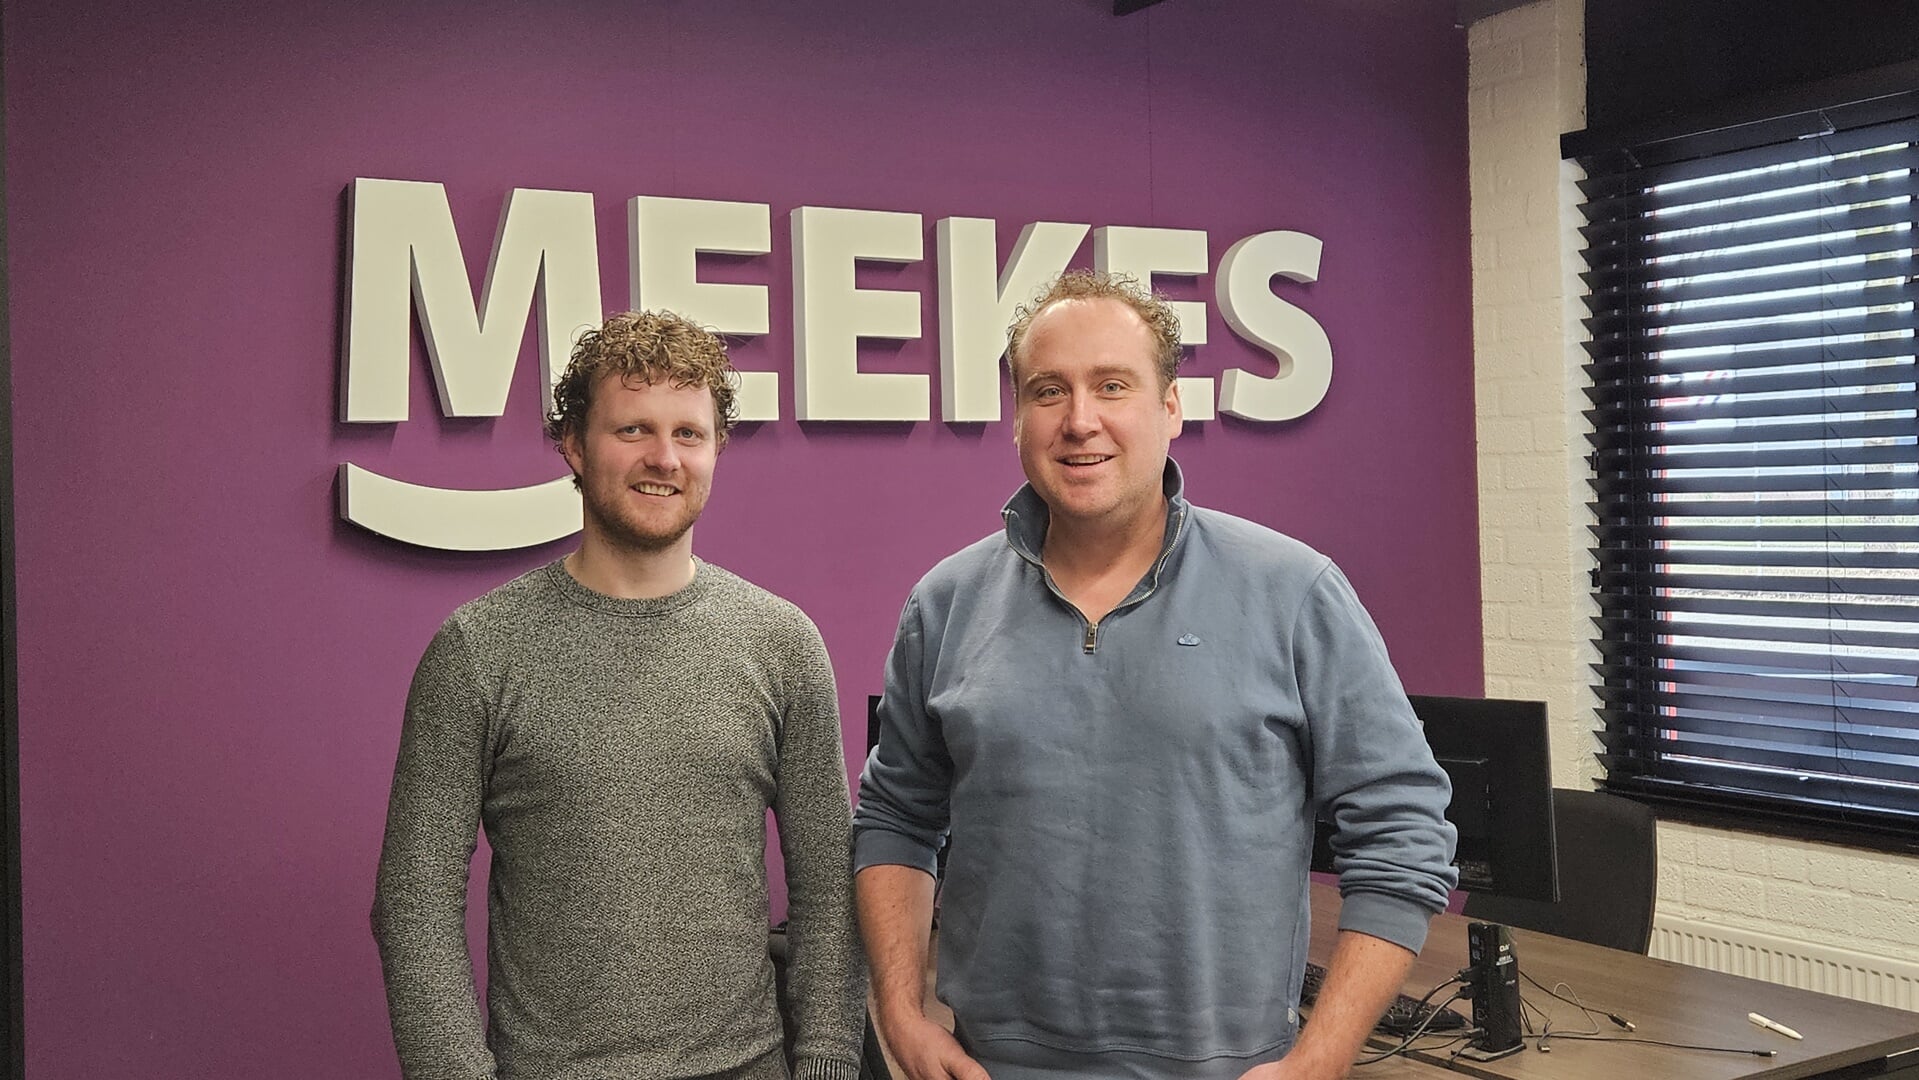 Meekes is nieuw hoofdsponsor van LVG. Eigenaren van Meekes, Jesse Giesen (links)  en Chiel Meekes. Foto: Dinès Quist